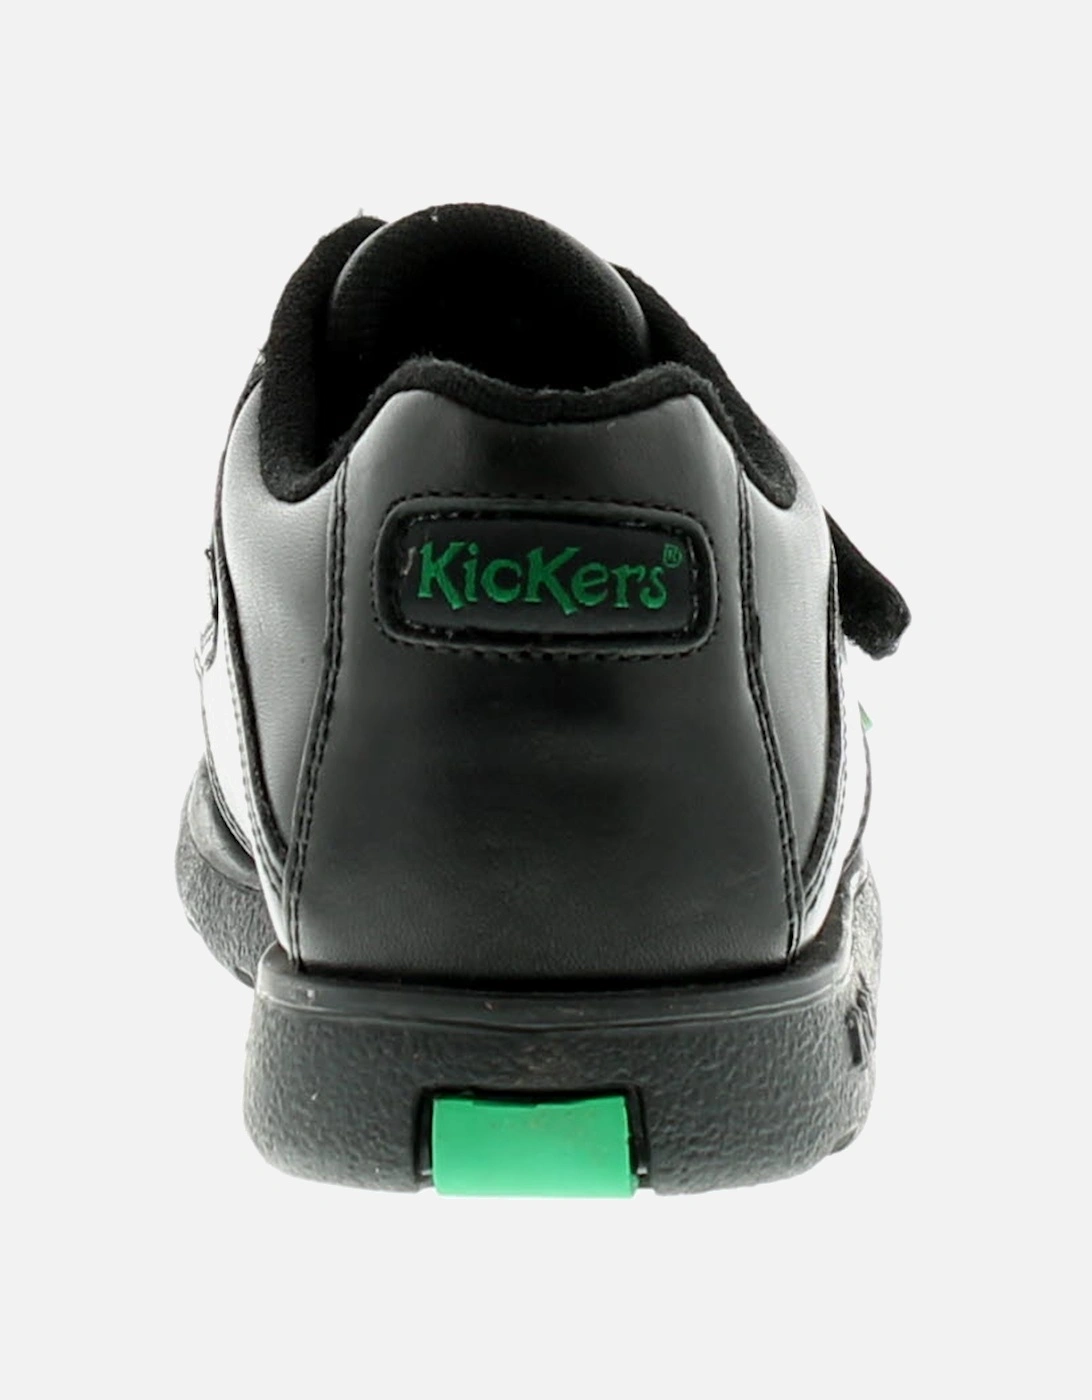 Boys School Shoes Fragma Strap3 Infant Leather Touch Fasten black UK Siz